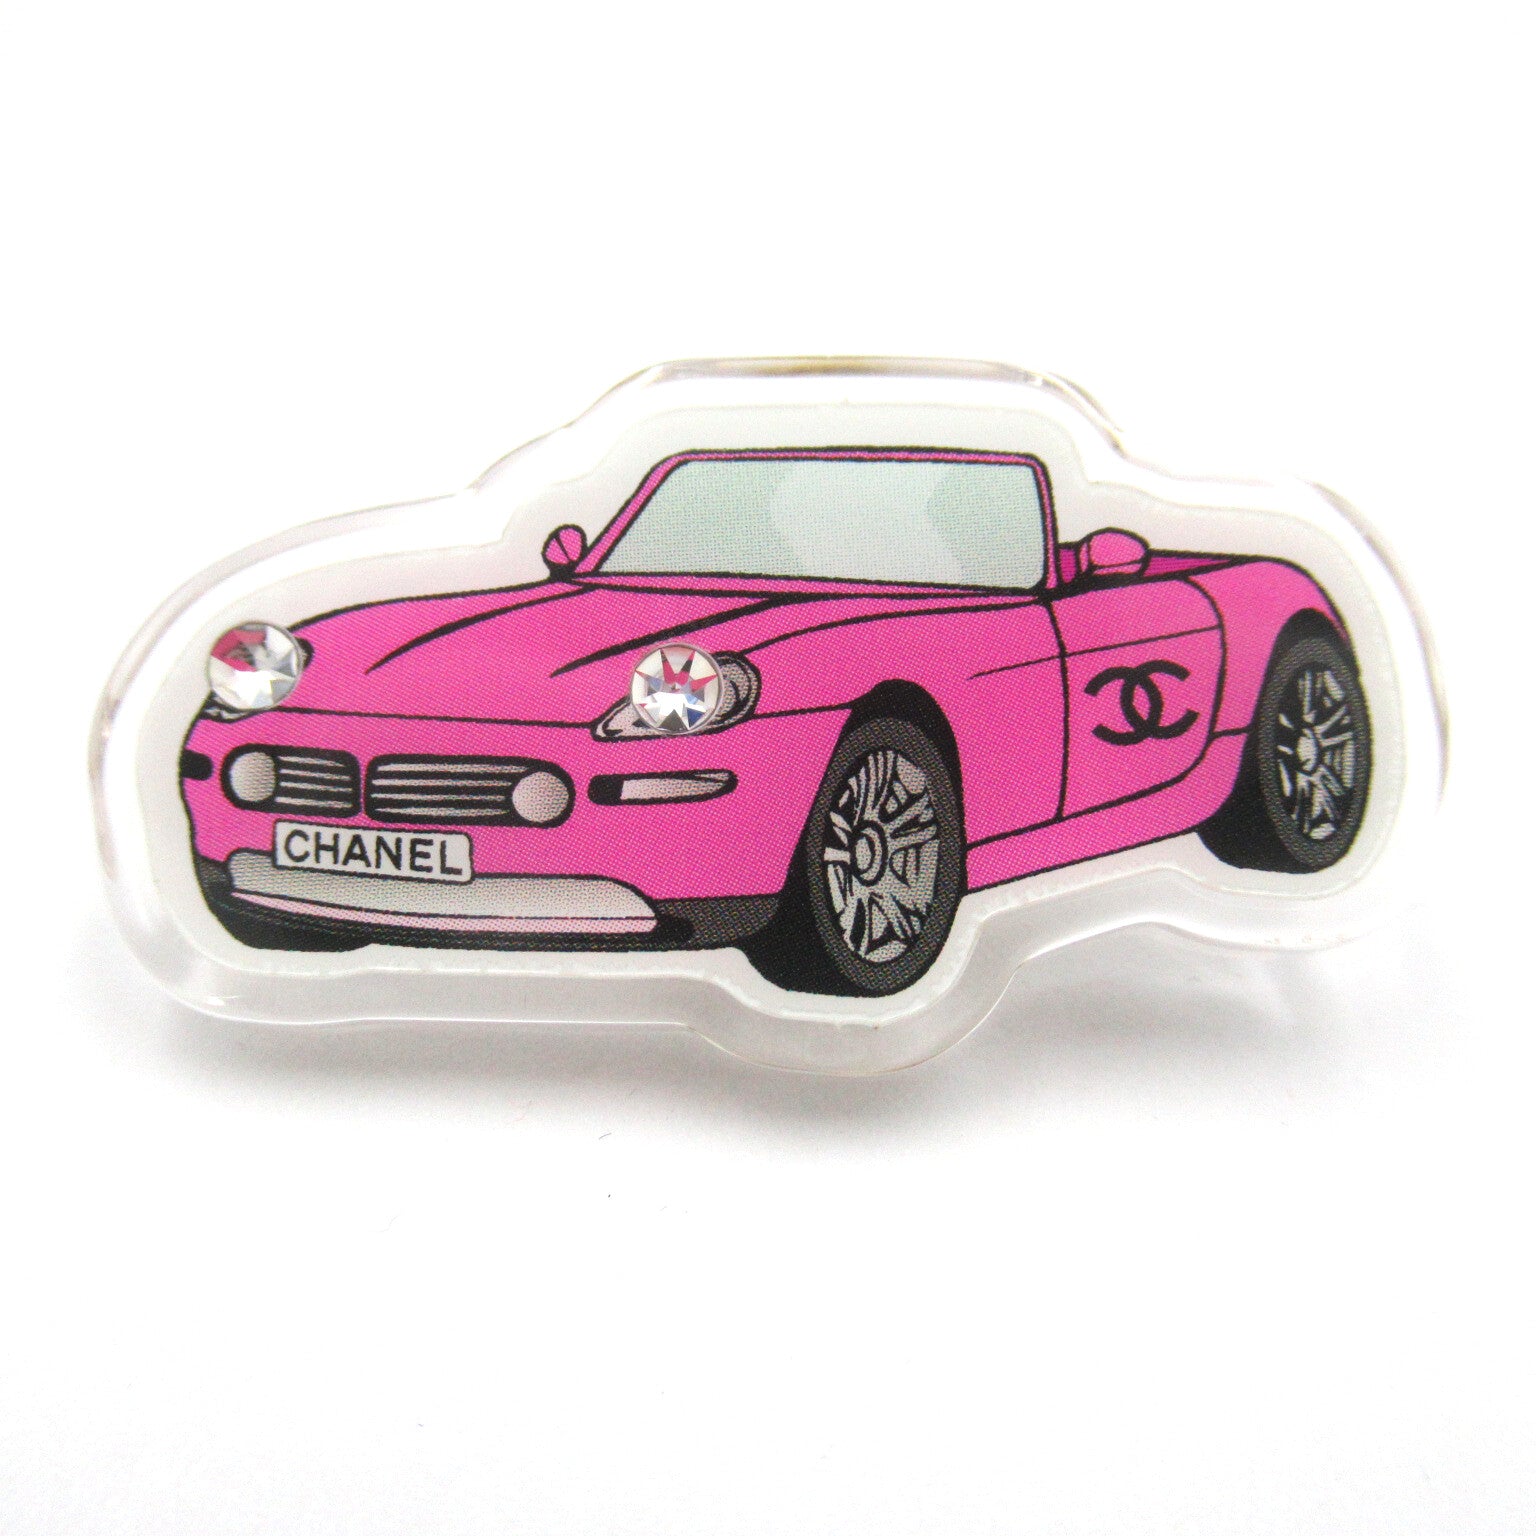 CHANEL Pin Brooch Car Brochure Accessories  GP (Gen Mesh)  Pink